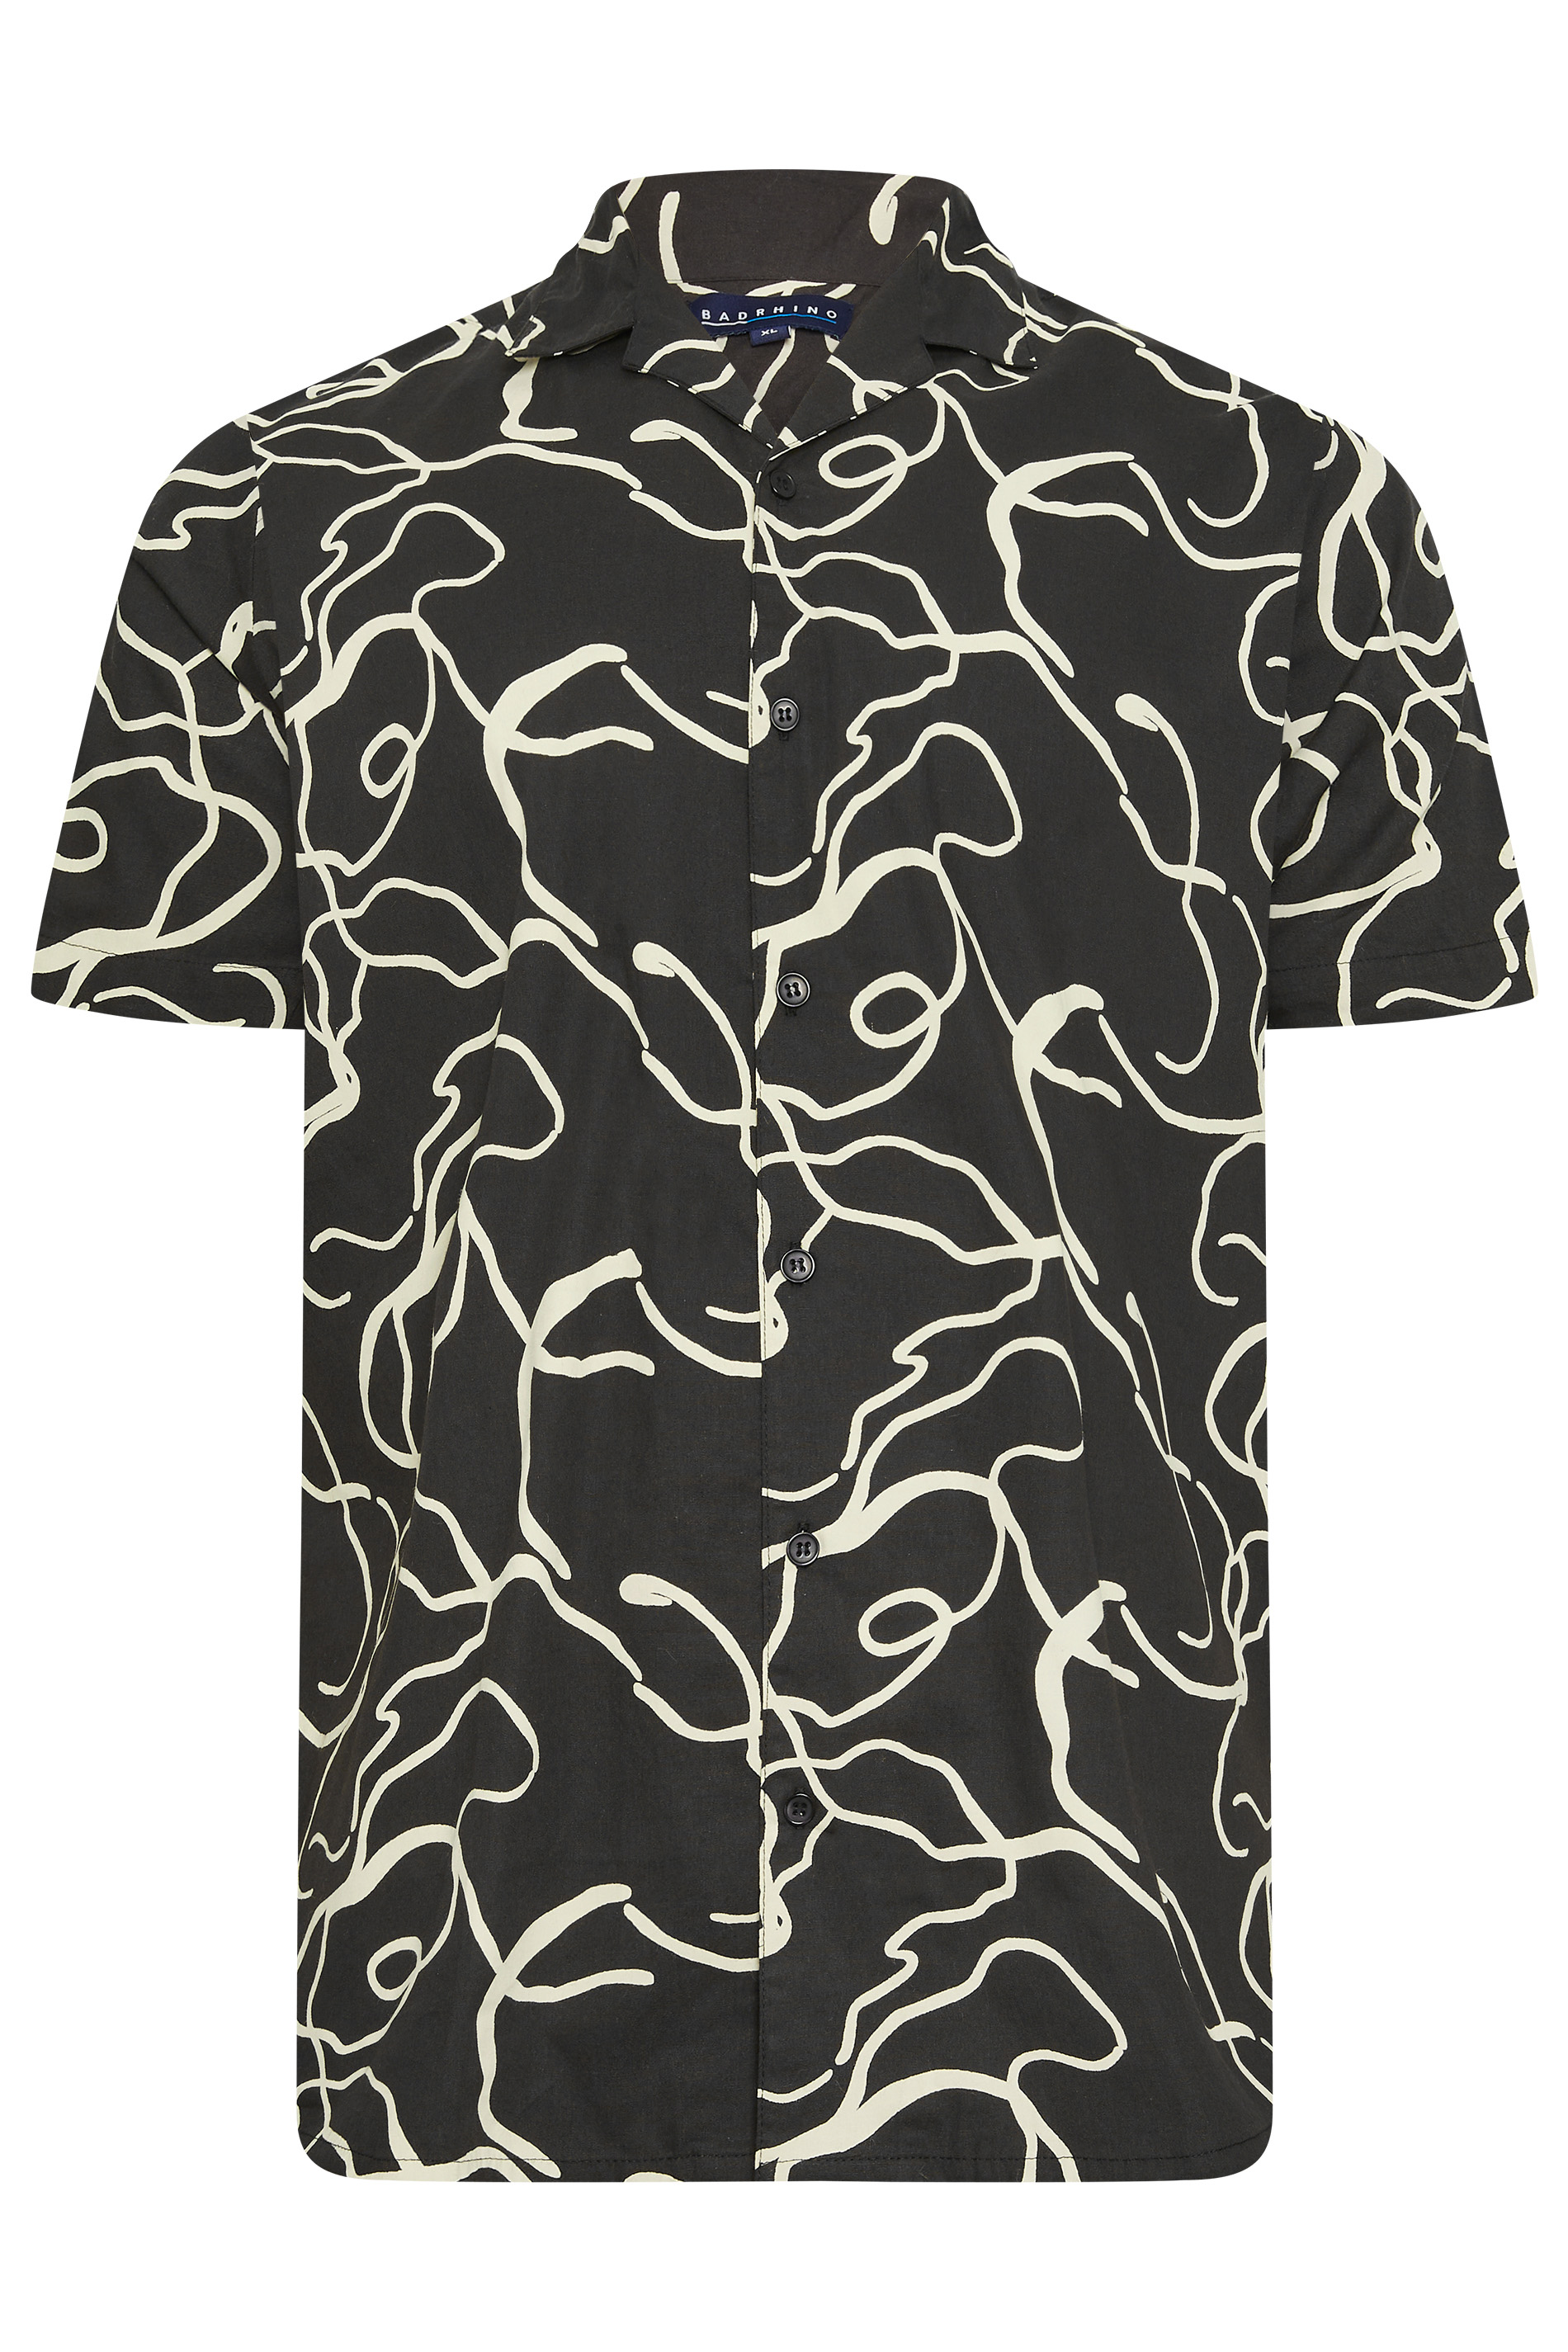 BadRhino Big & Tall Black Abstract Print Short Sleeve Shirt | BadRhino 2